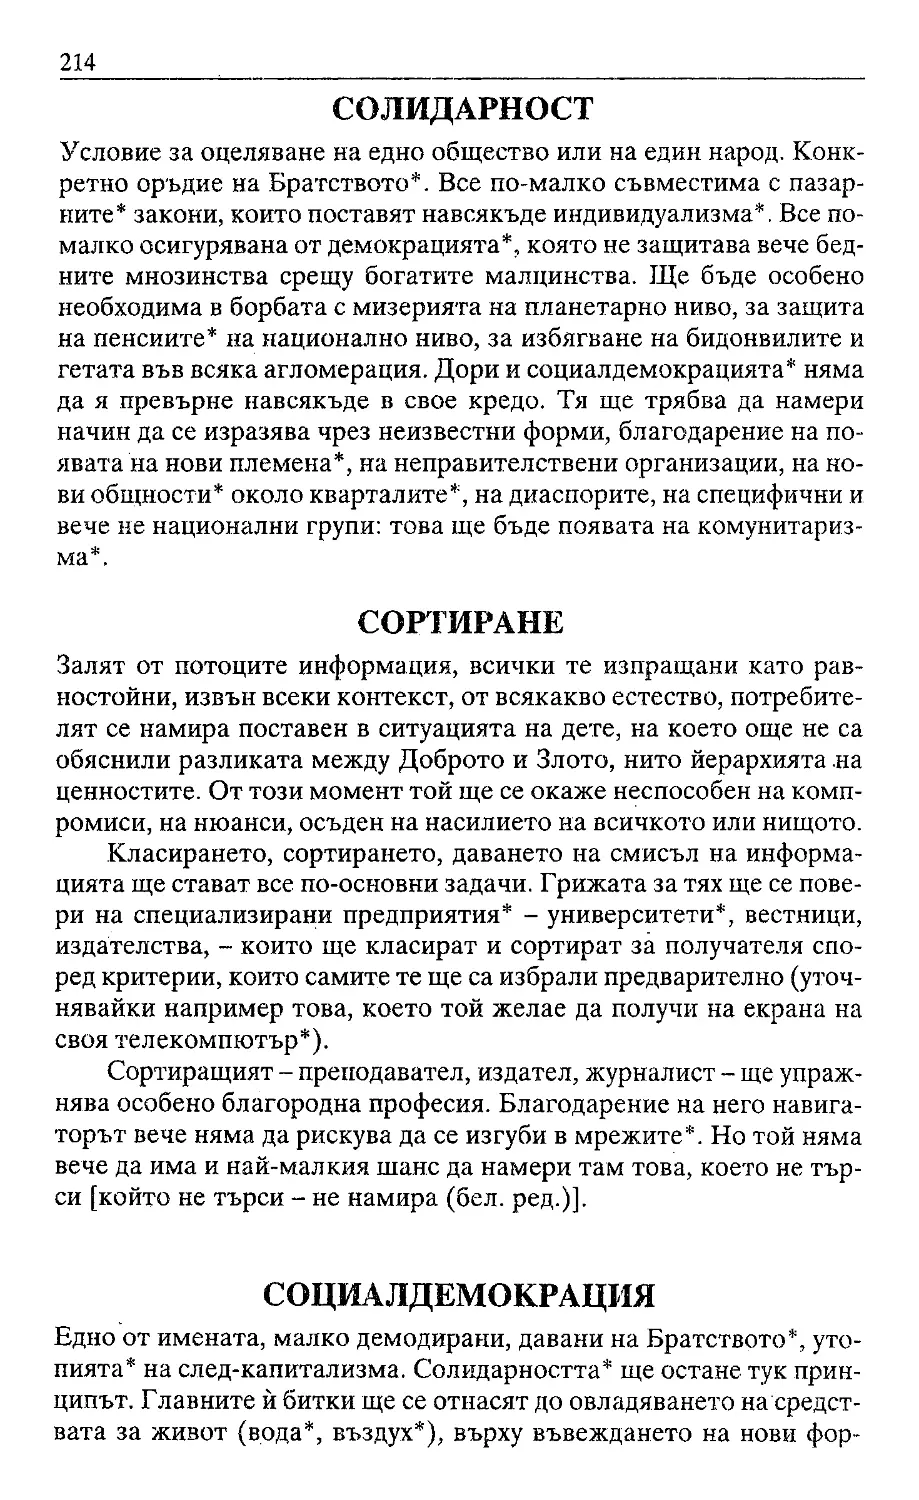 ﻿Жак Атали. Речник на 21 век_Page_106_Image_0001_1